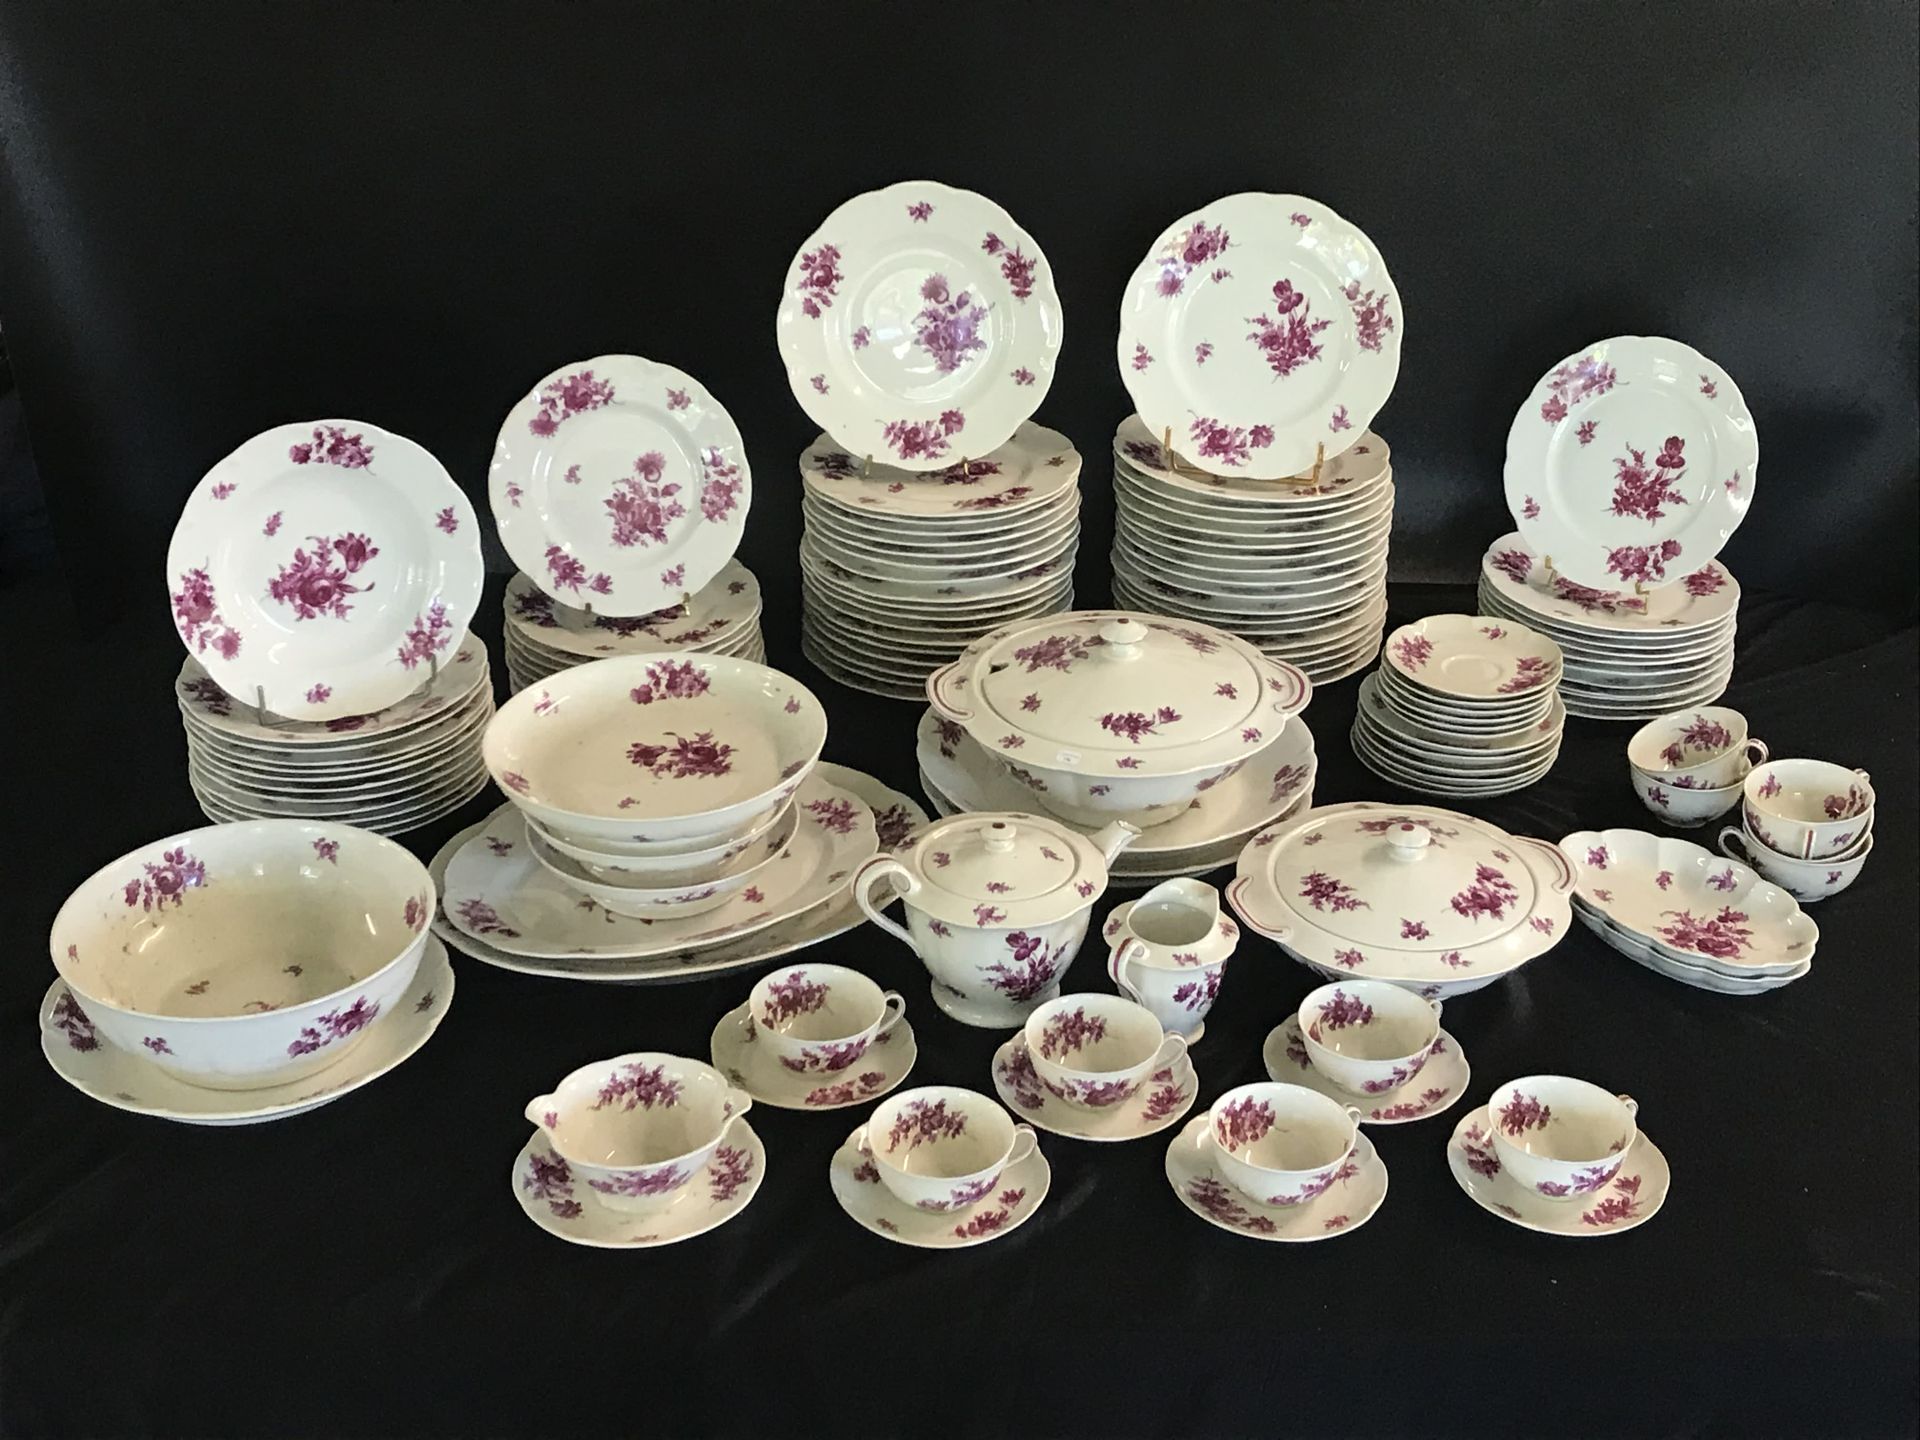 Null 多尔-哈维兰-利摩日

重要的瓷器晚餐服务与紫色花朵装饰

- 36个餐盘

- 12个汤盘

- 24个甜品盘

- 5个大餐盘

- 2个瓦罐

&hellip;